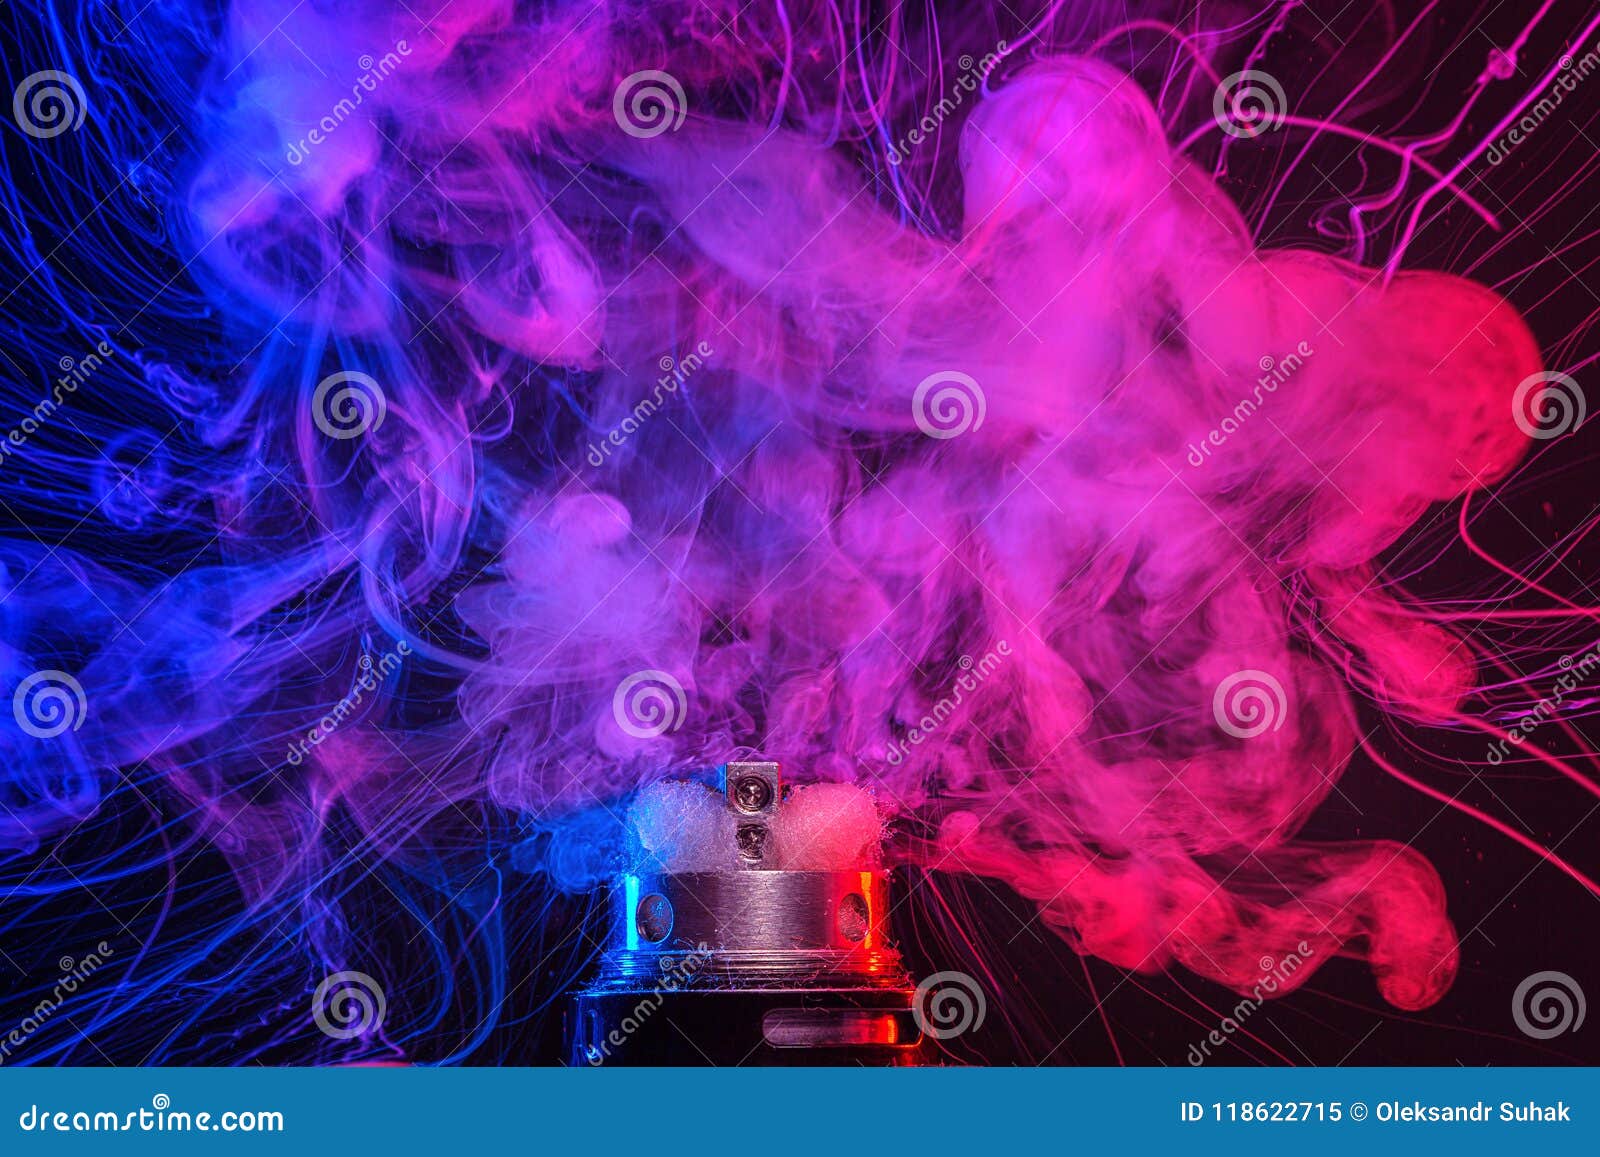 Electronic Cigarette Vape Explosion. Cloud of Vapor Stock Image - Image ...